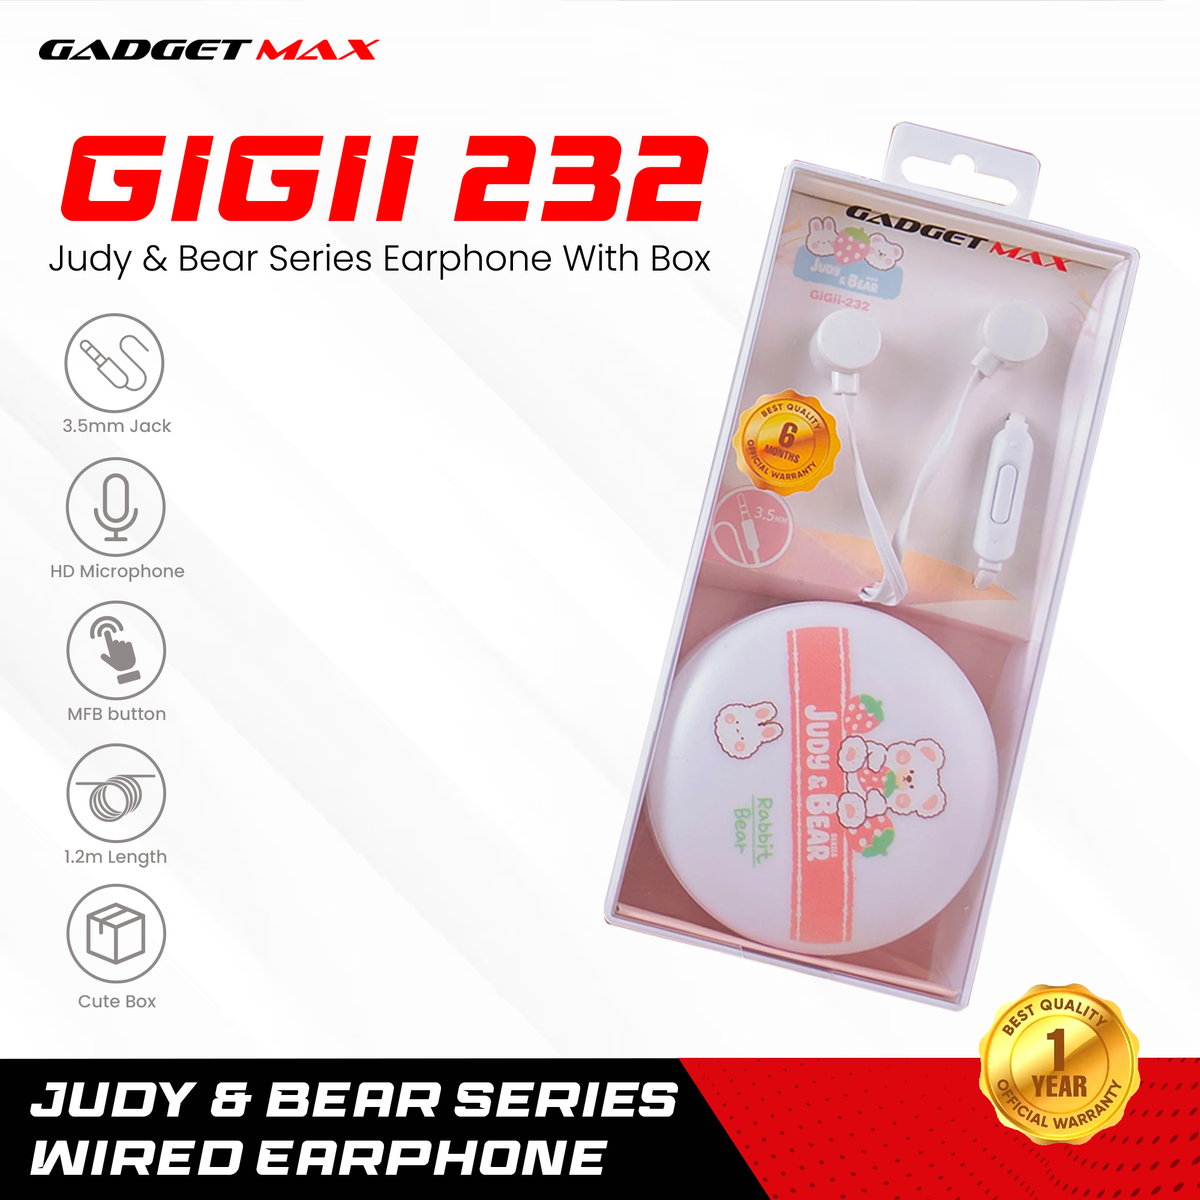 GADGET MAX GIGII-232 JUDY&BEAR SERIES 3.5MM WIRED EARPHONE - WHITE